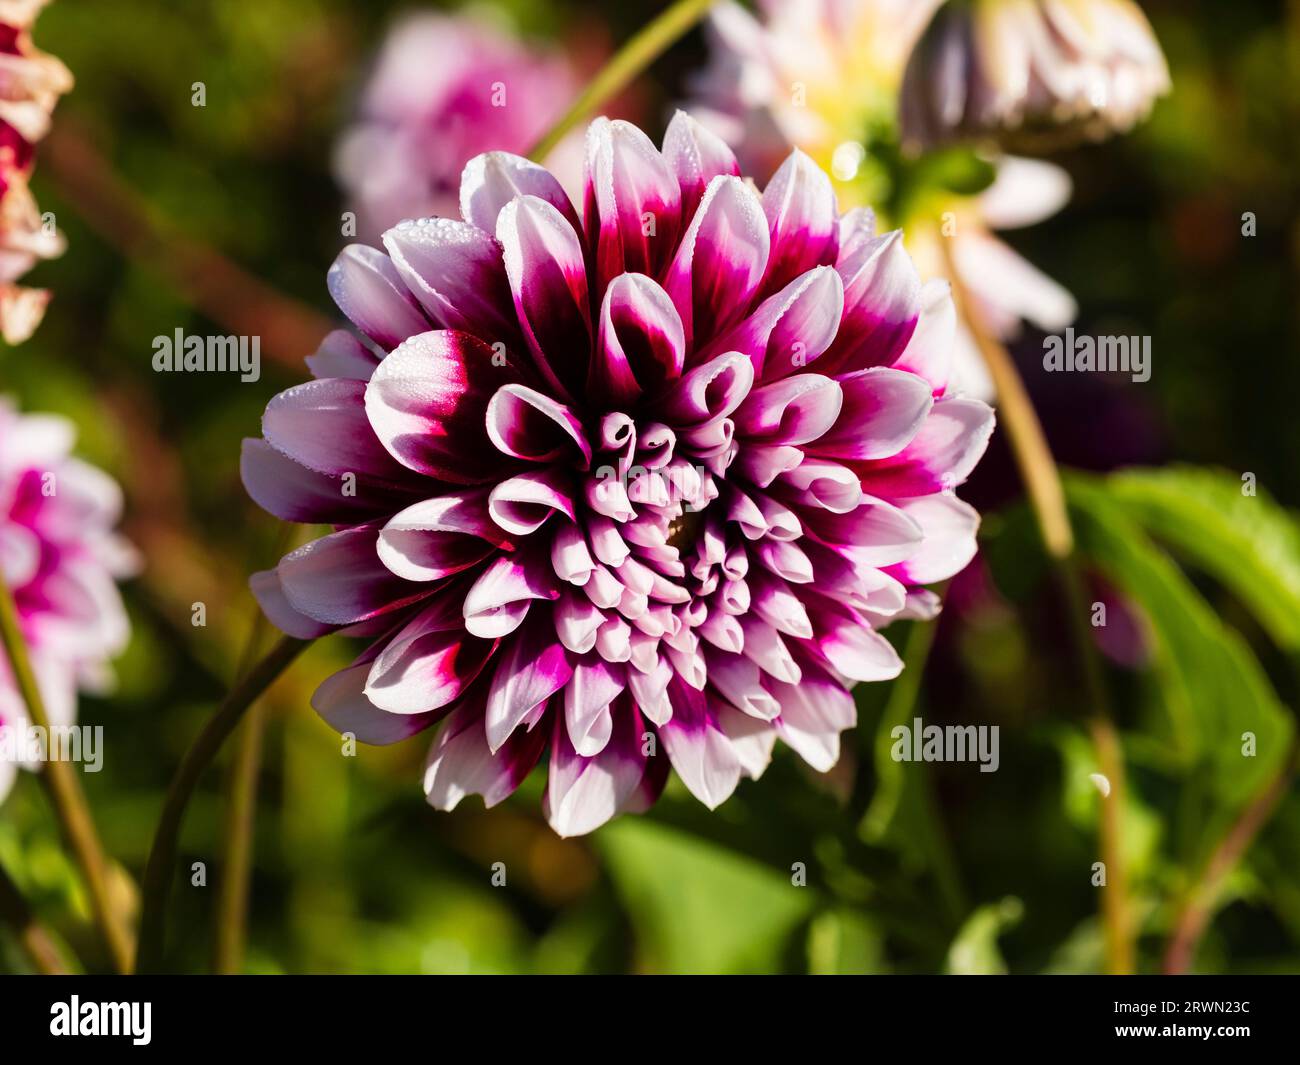 white tipped double purple flowers of the decorative summer flowering tuber, Dahlia 'Edinburgh' Stock Photo